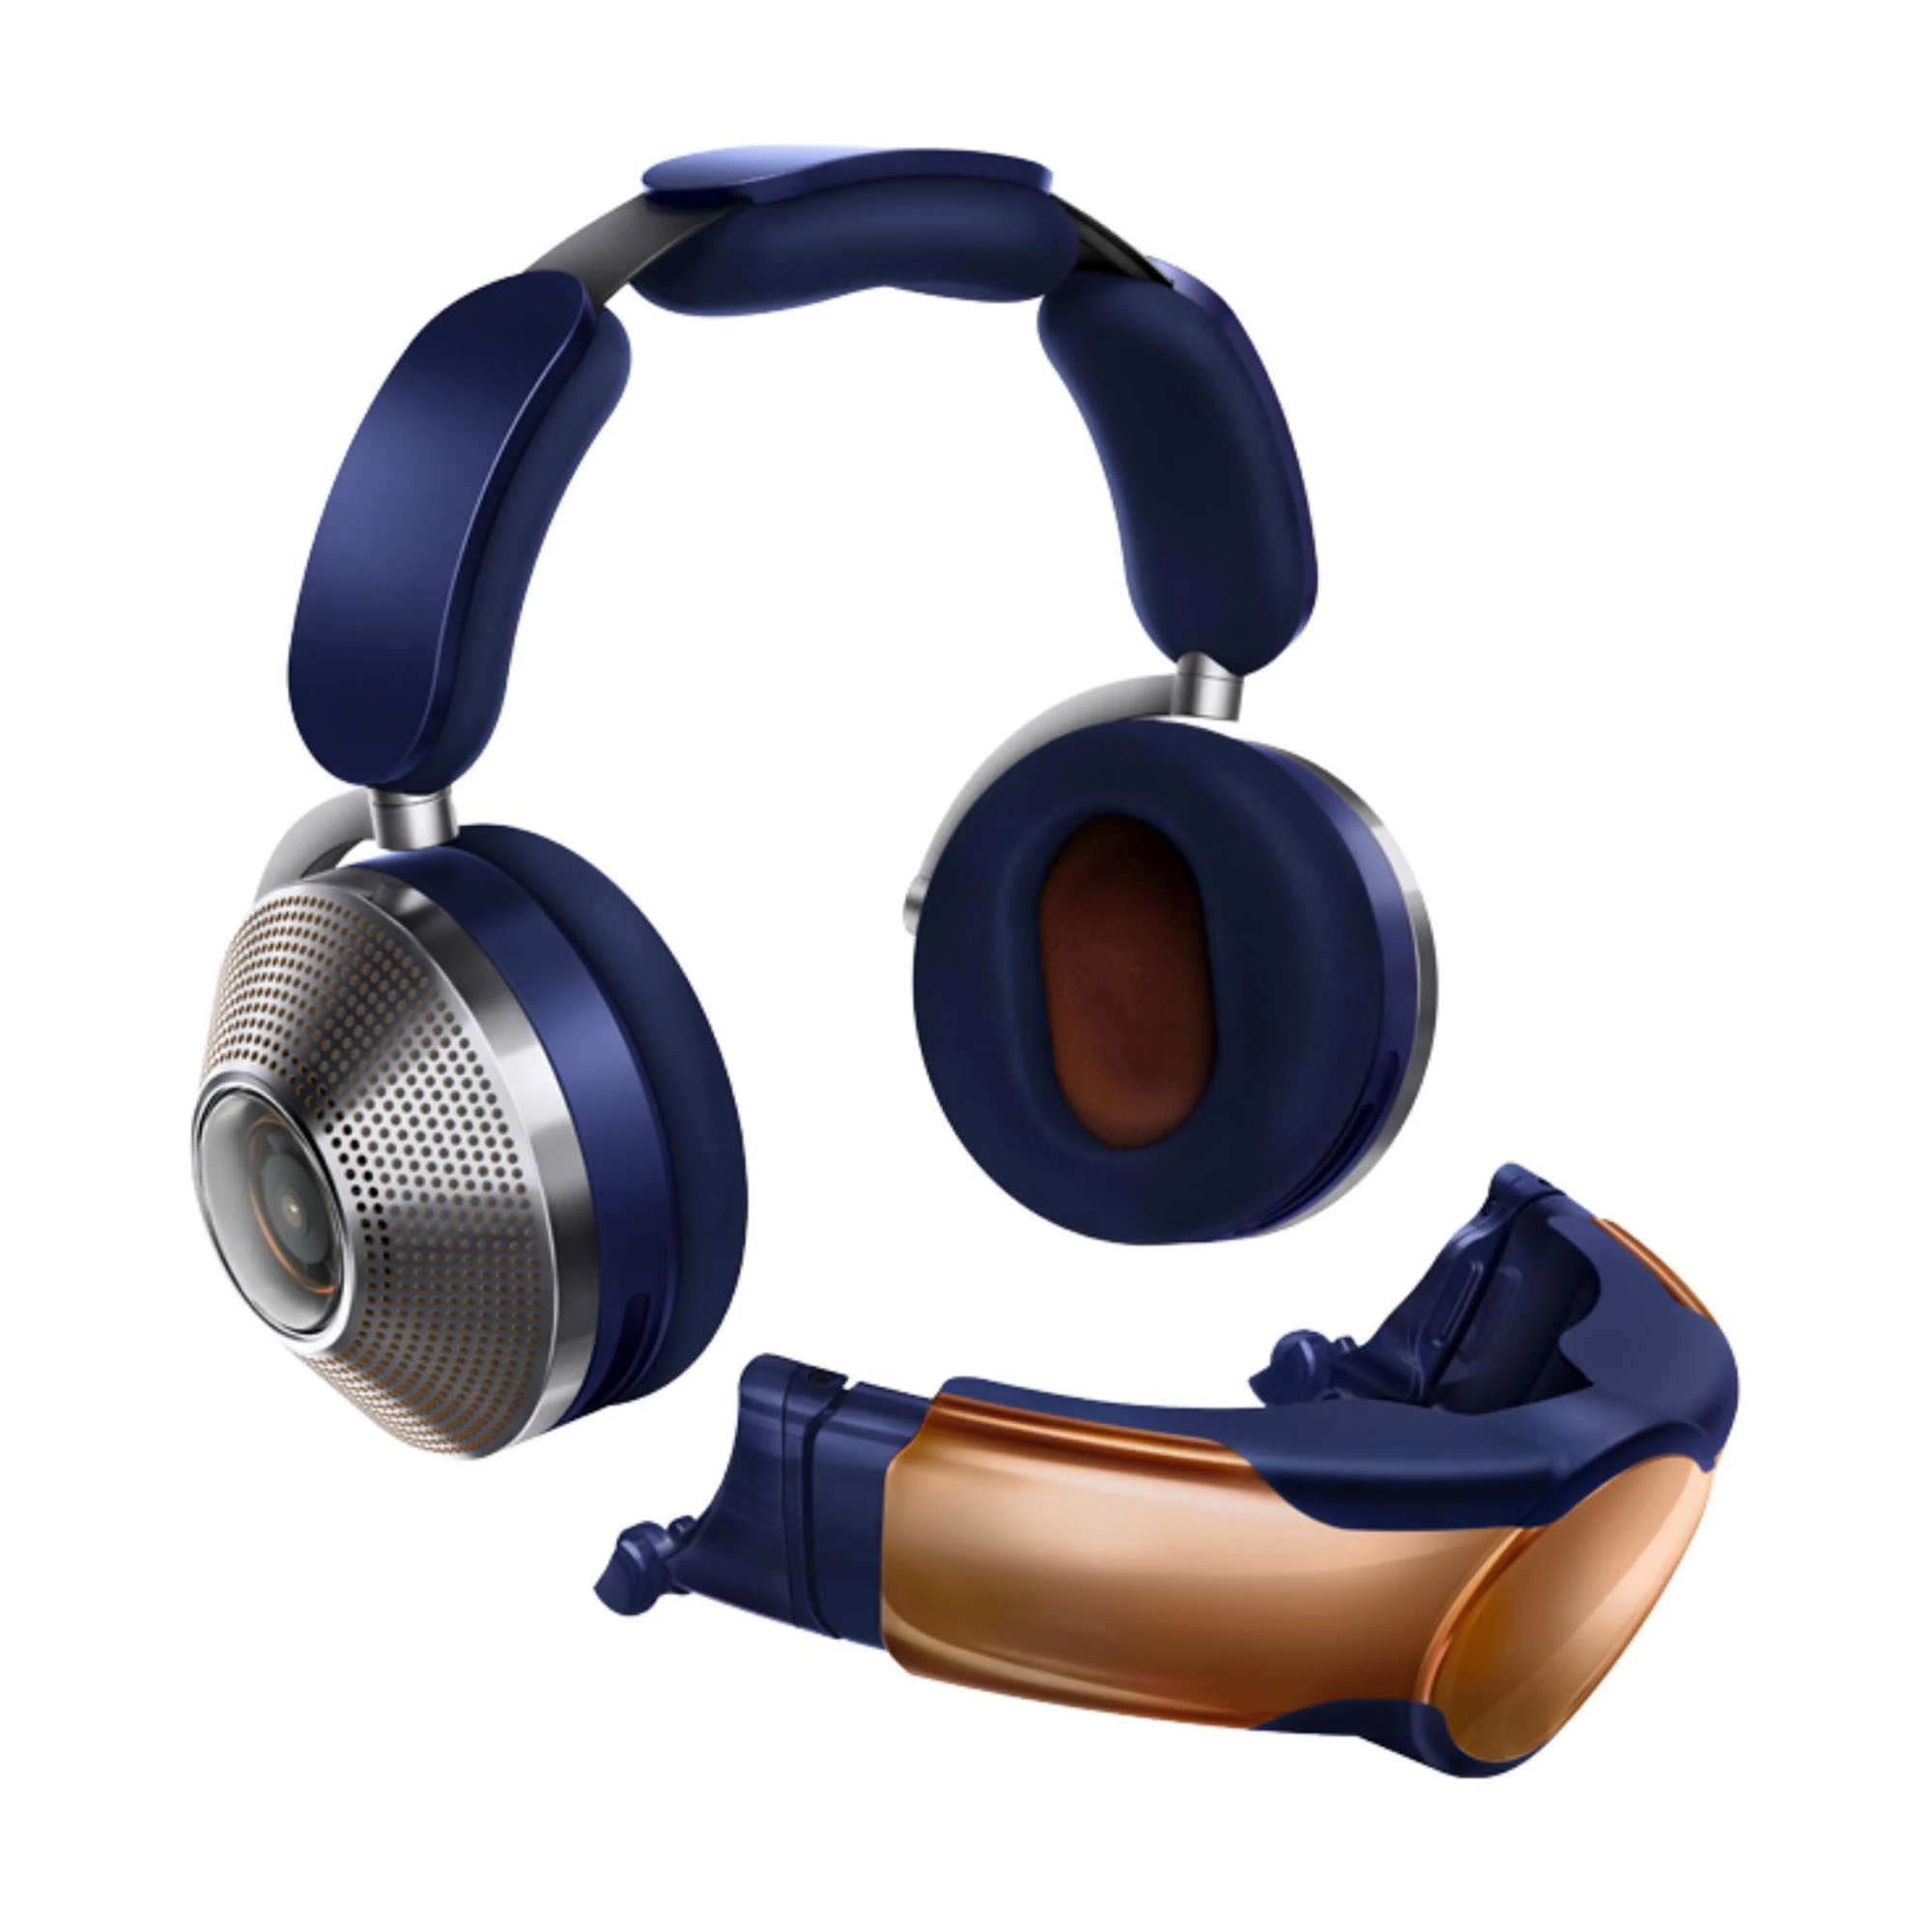 Навушники з функцією очищення повітря Dyson Zone Absolute+ Headphones with Air Purification - Prussian Blue/Bright Copper (376121-01)